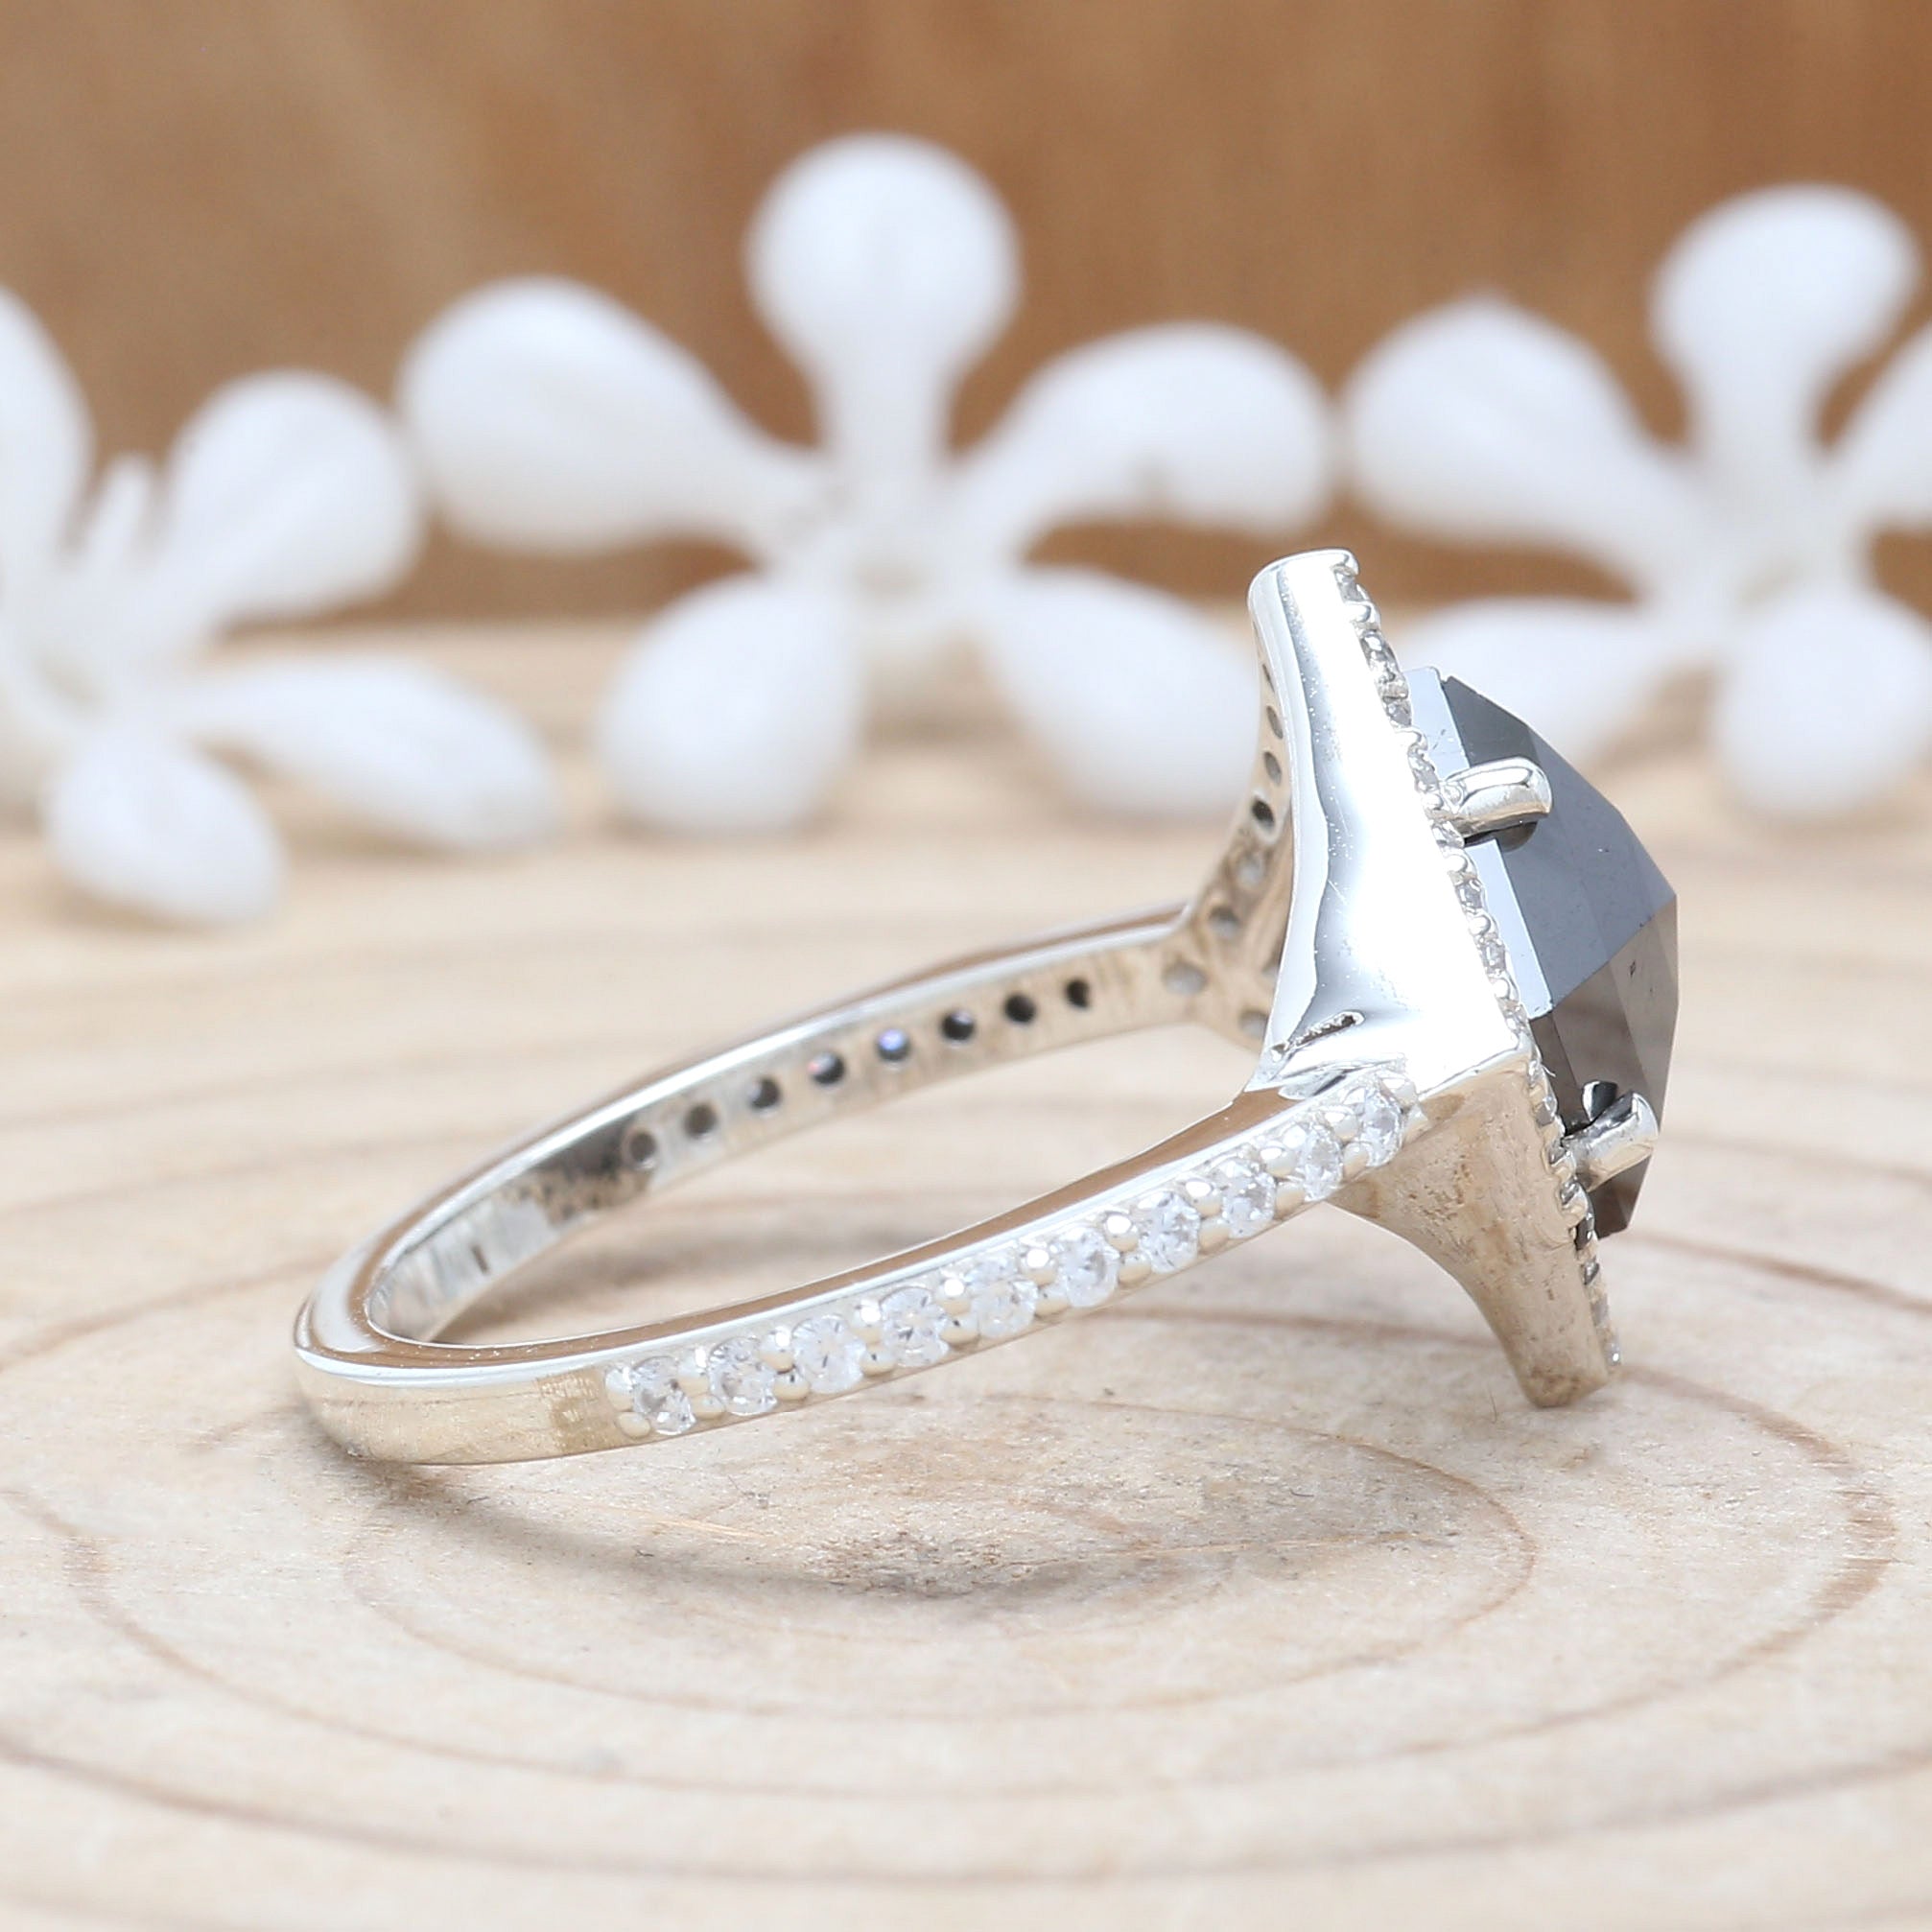 Kite Cut Black Color Diamond Ring 1.96 Ct 9.65 MM Kite Shape Diamond Ring 14K Solid White Gold Silver Engagement Ring Gift For Her QL9571